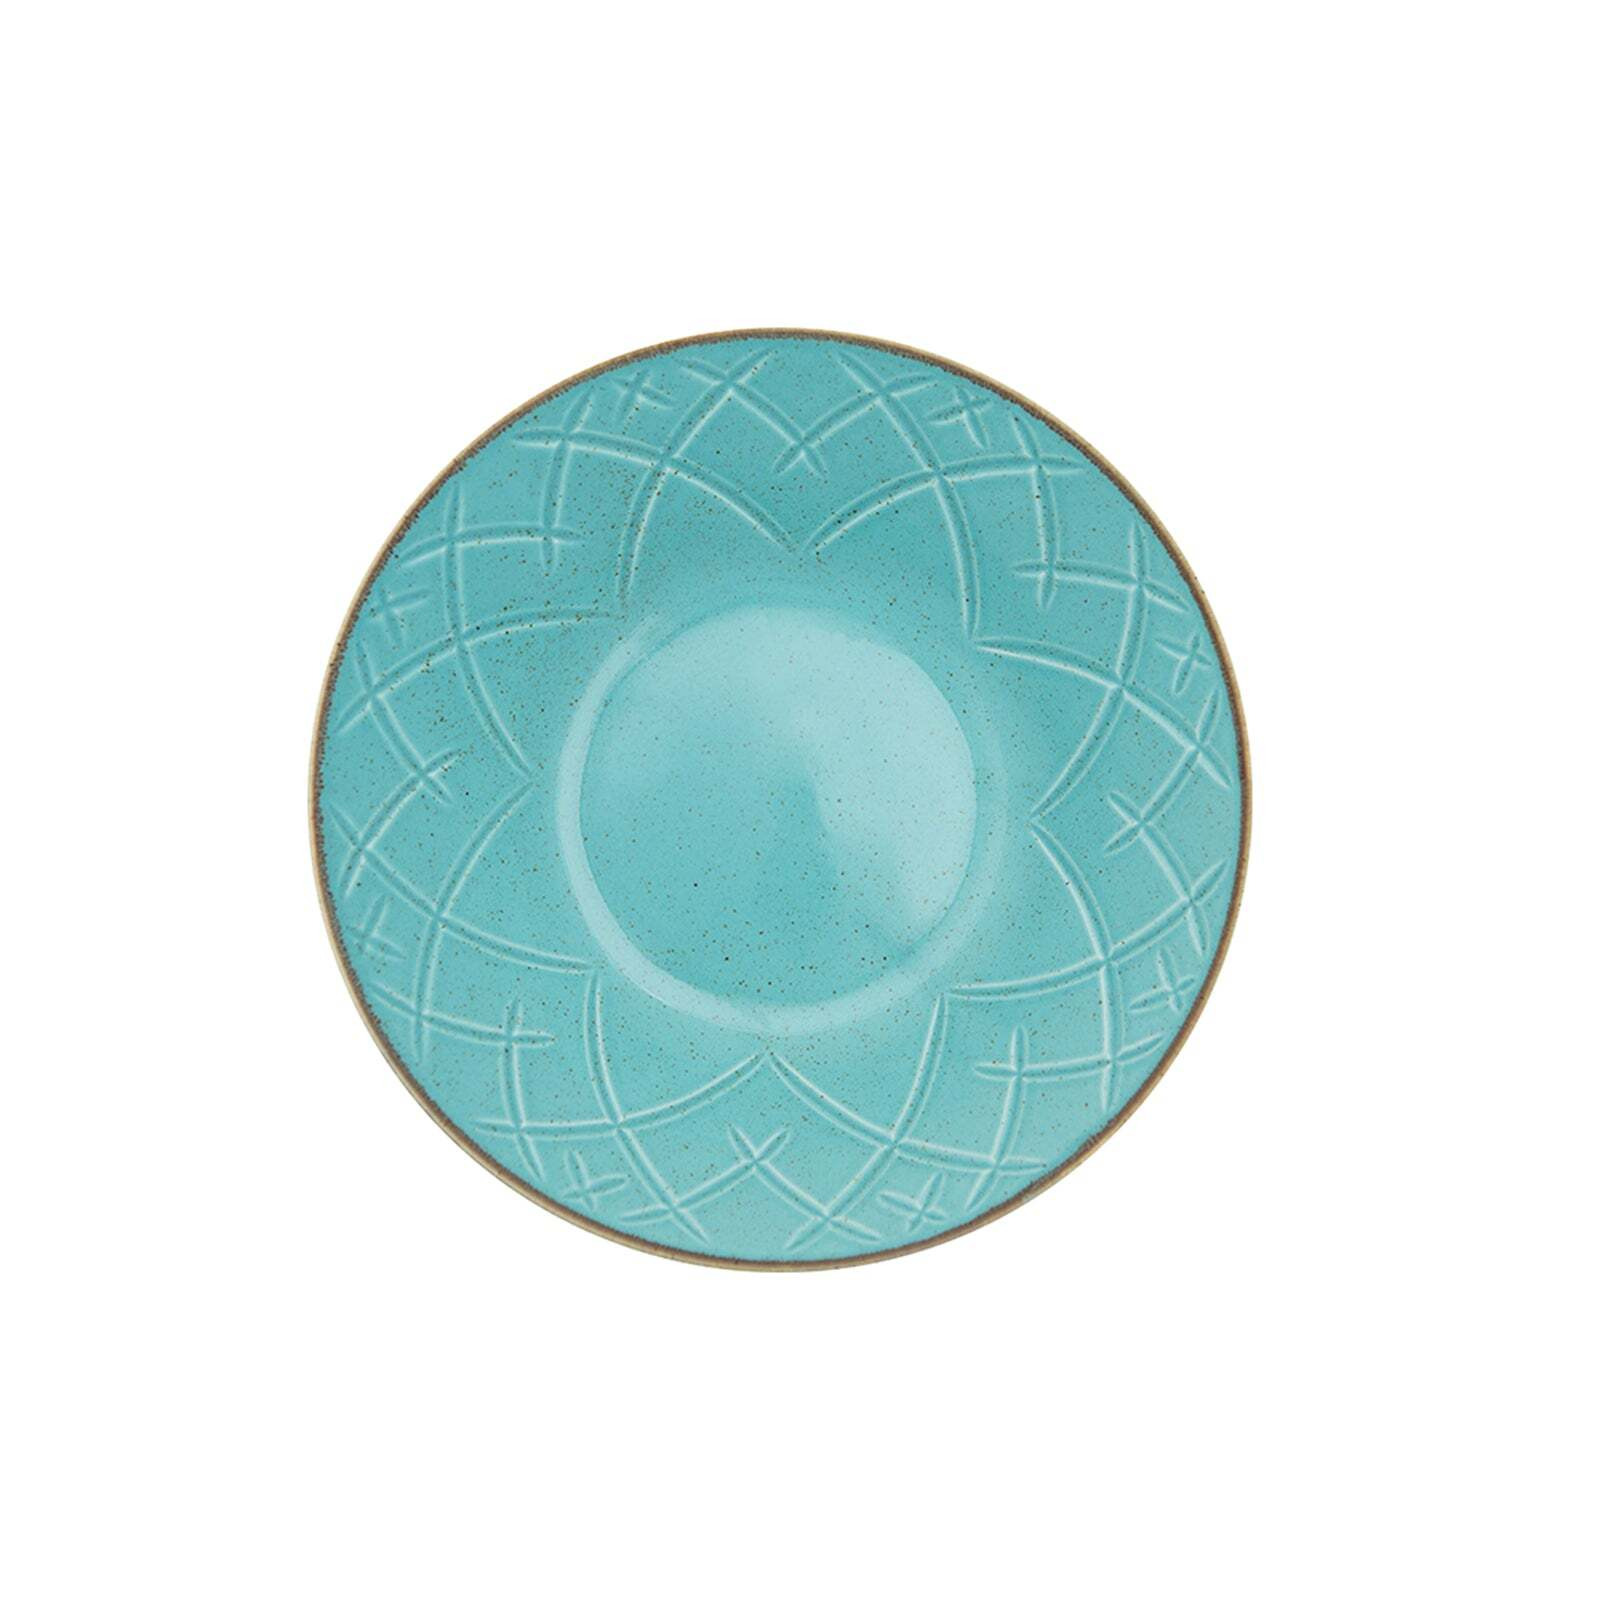 Christina Set of 6 Bowls, Turquoise, 24 cm